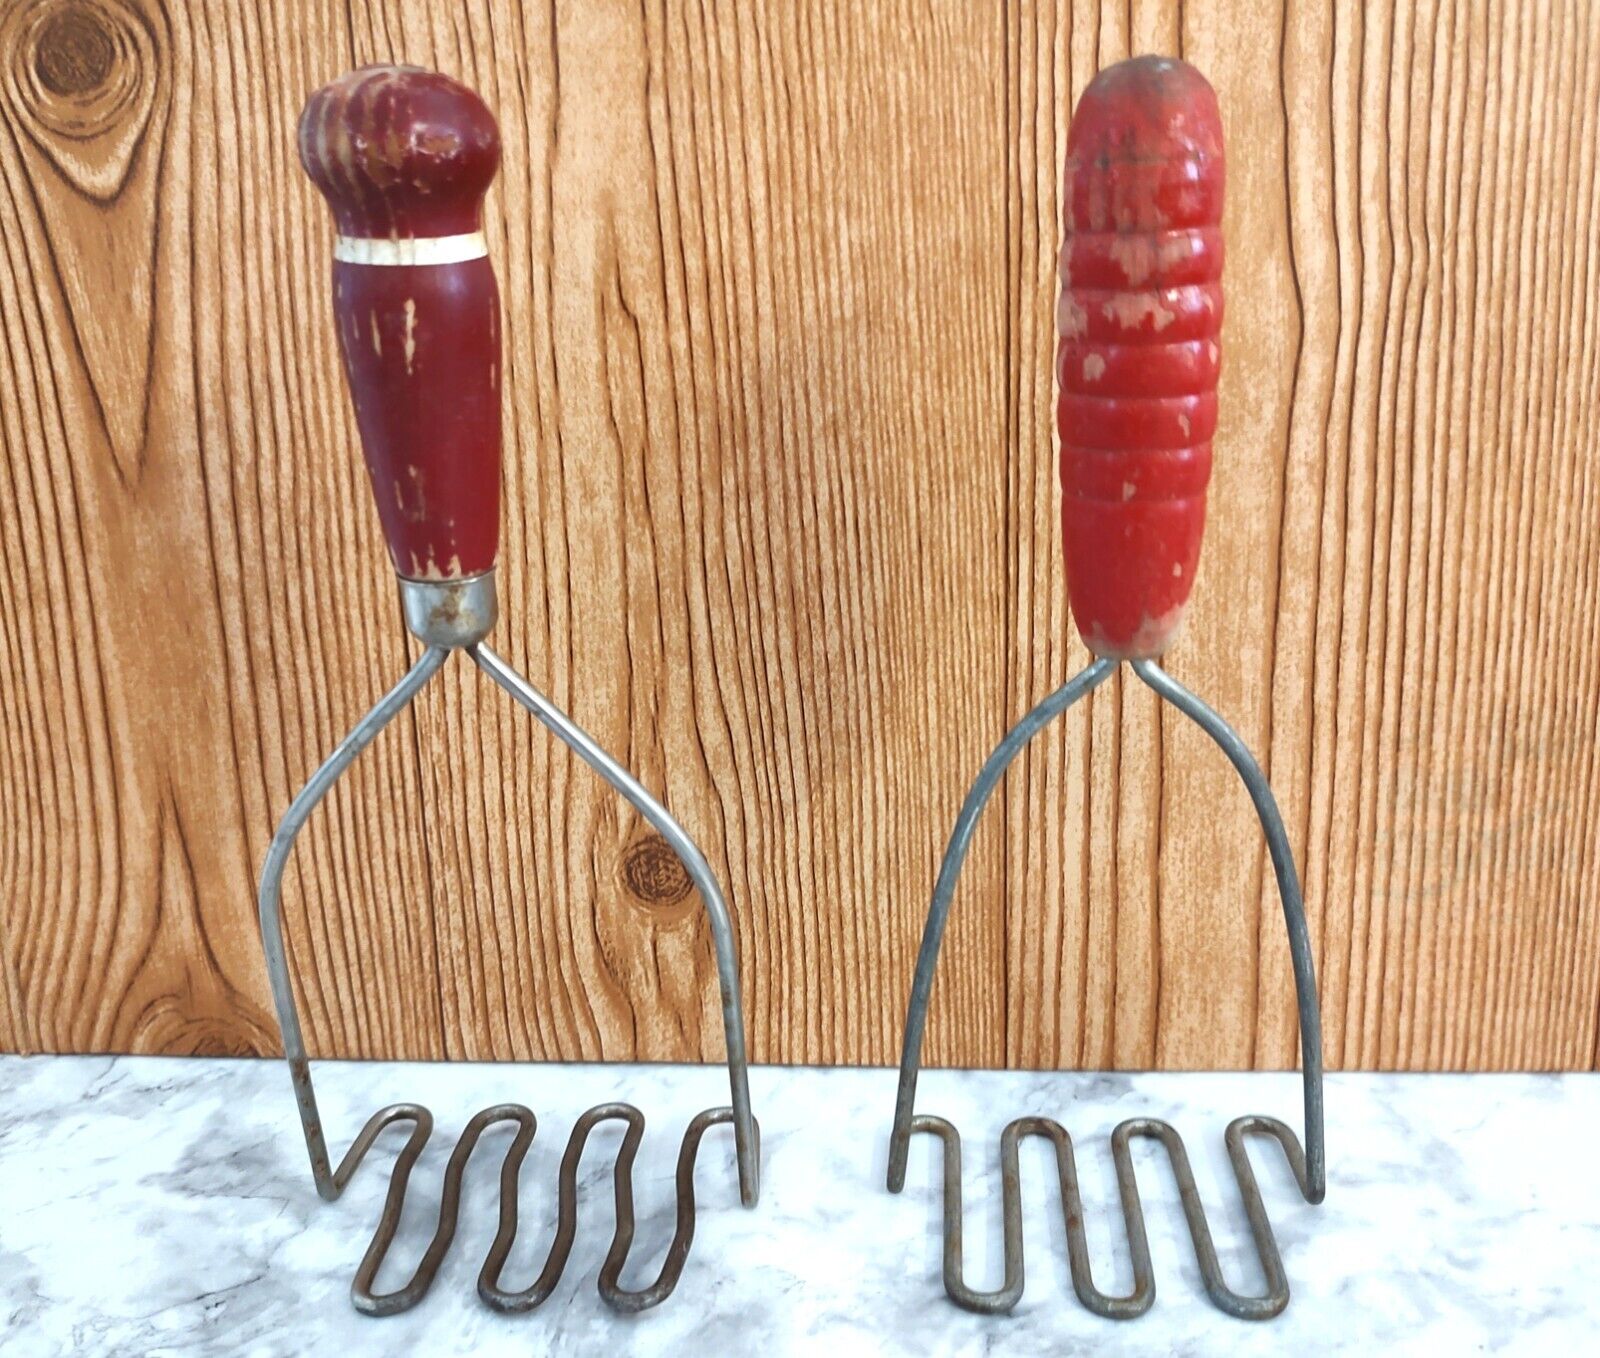 Vtg Red Wood Handle Potato Masher Set of Two 1930s - 60s Kitchen Utensils